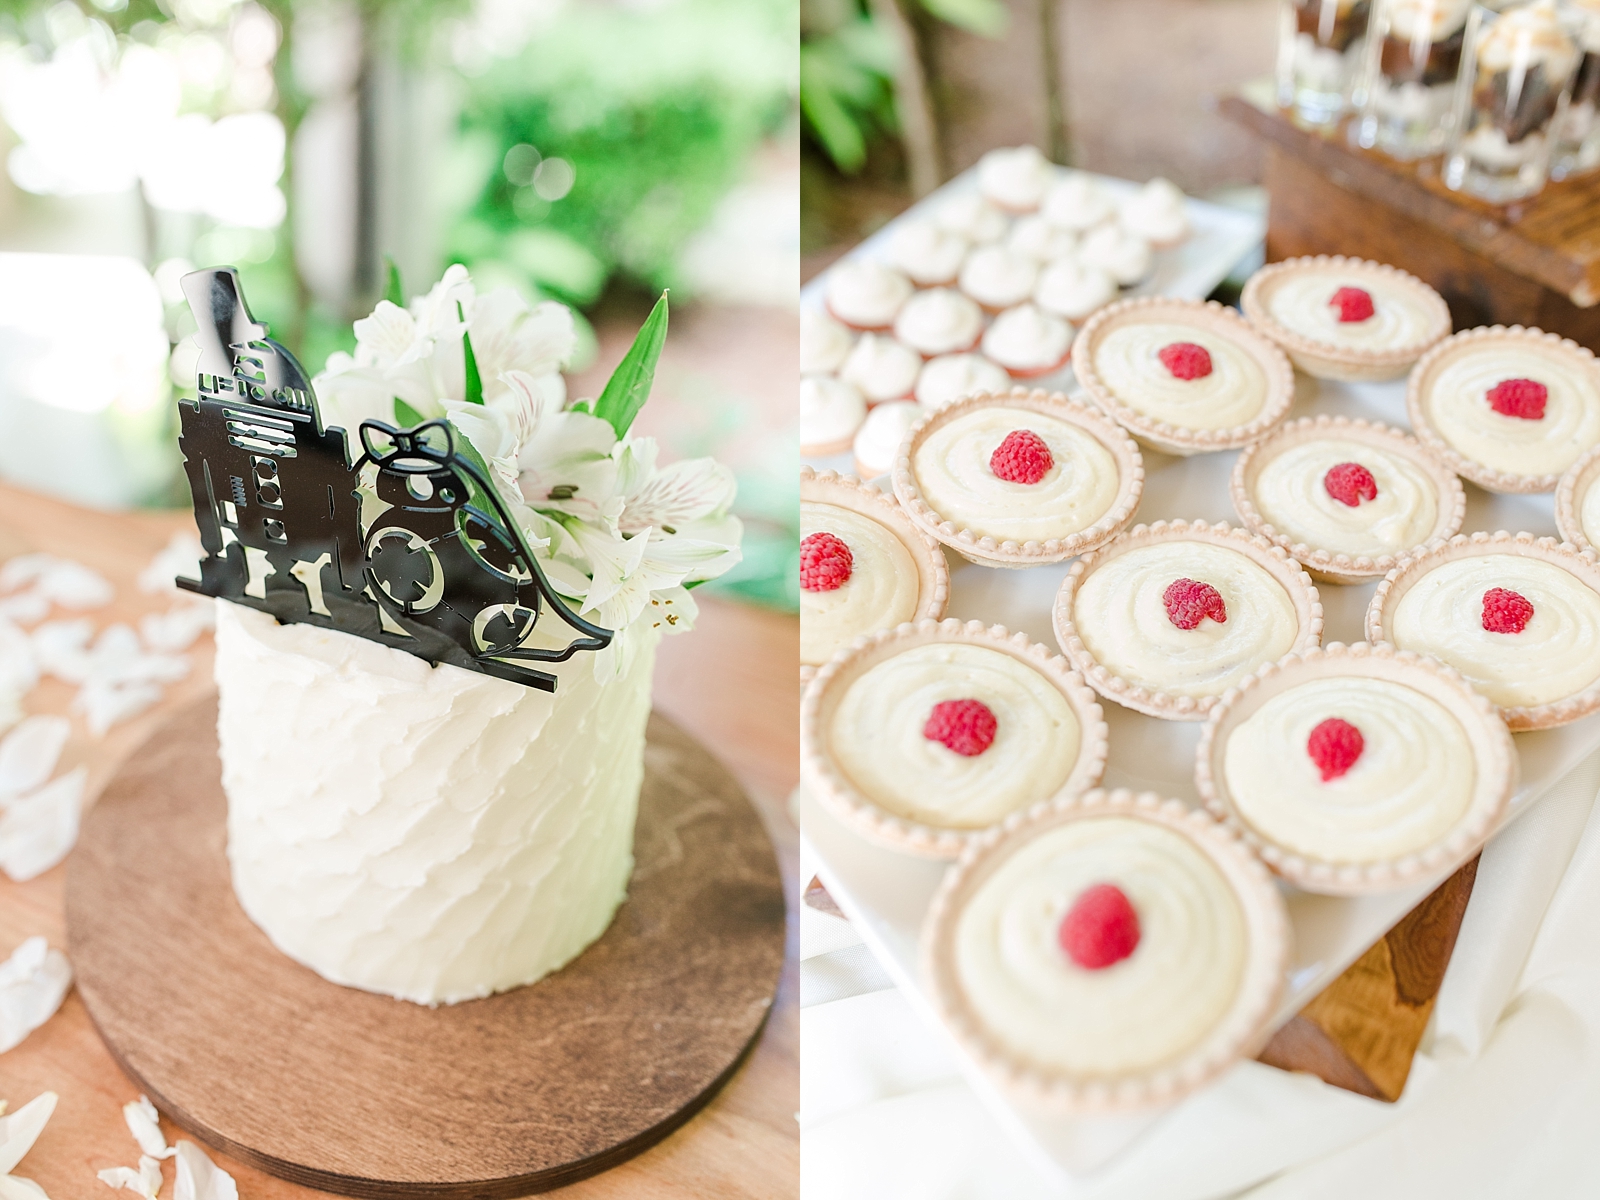 Hawkesdene Wedding Cake and Pastries Photos